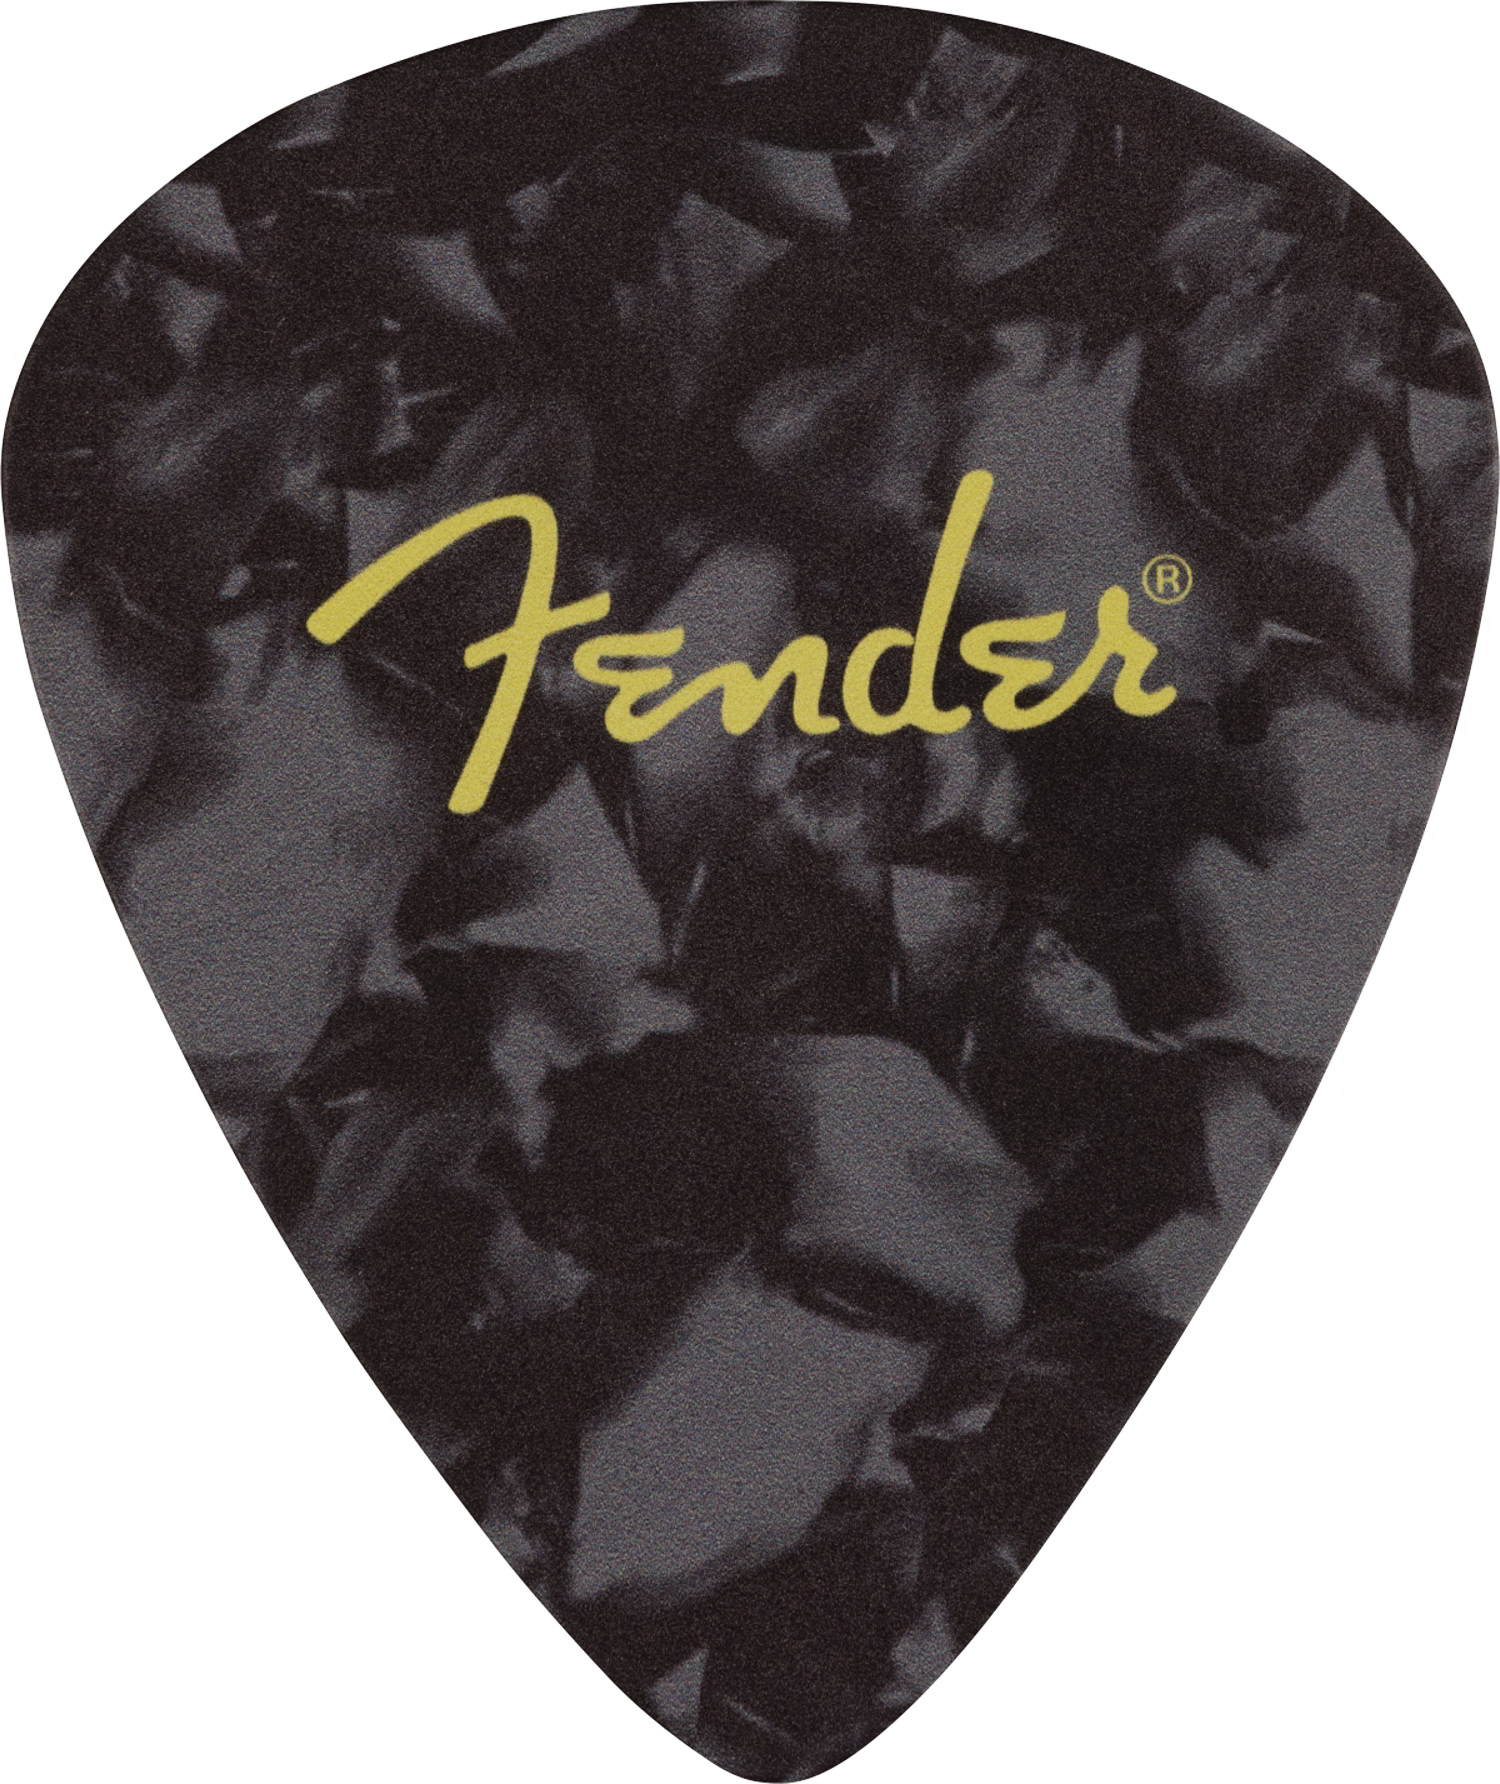 Fender® Pick Shape Logo Coasters, 4-Pack, Multi-Color追加画像